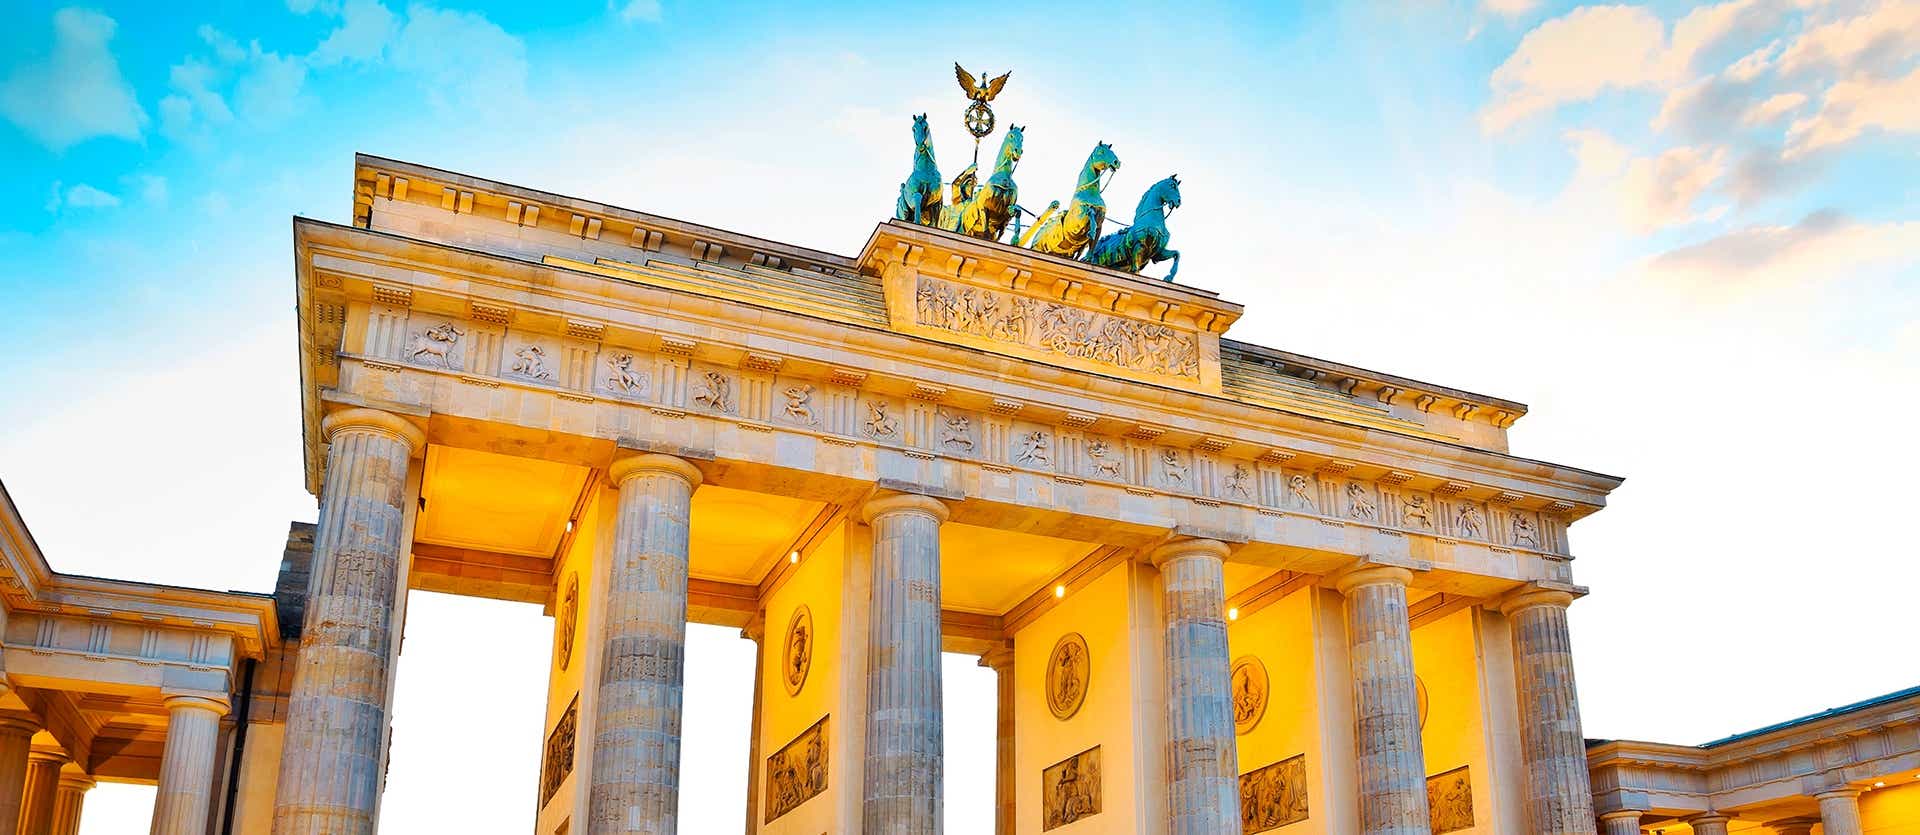 Brandenburg Gate <span class="iconos separador"></span> Berlin <span class="iconos separador"></span> Germany